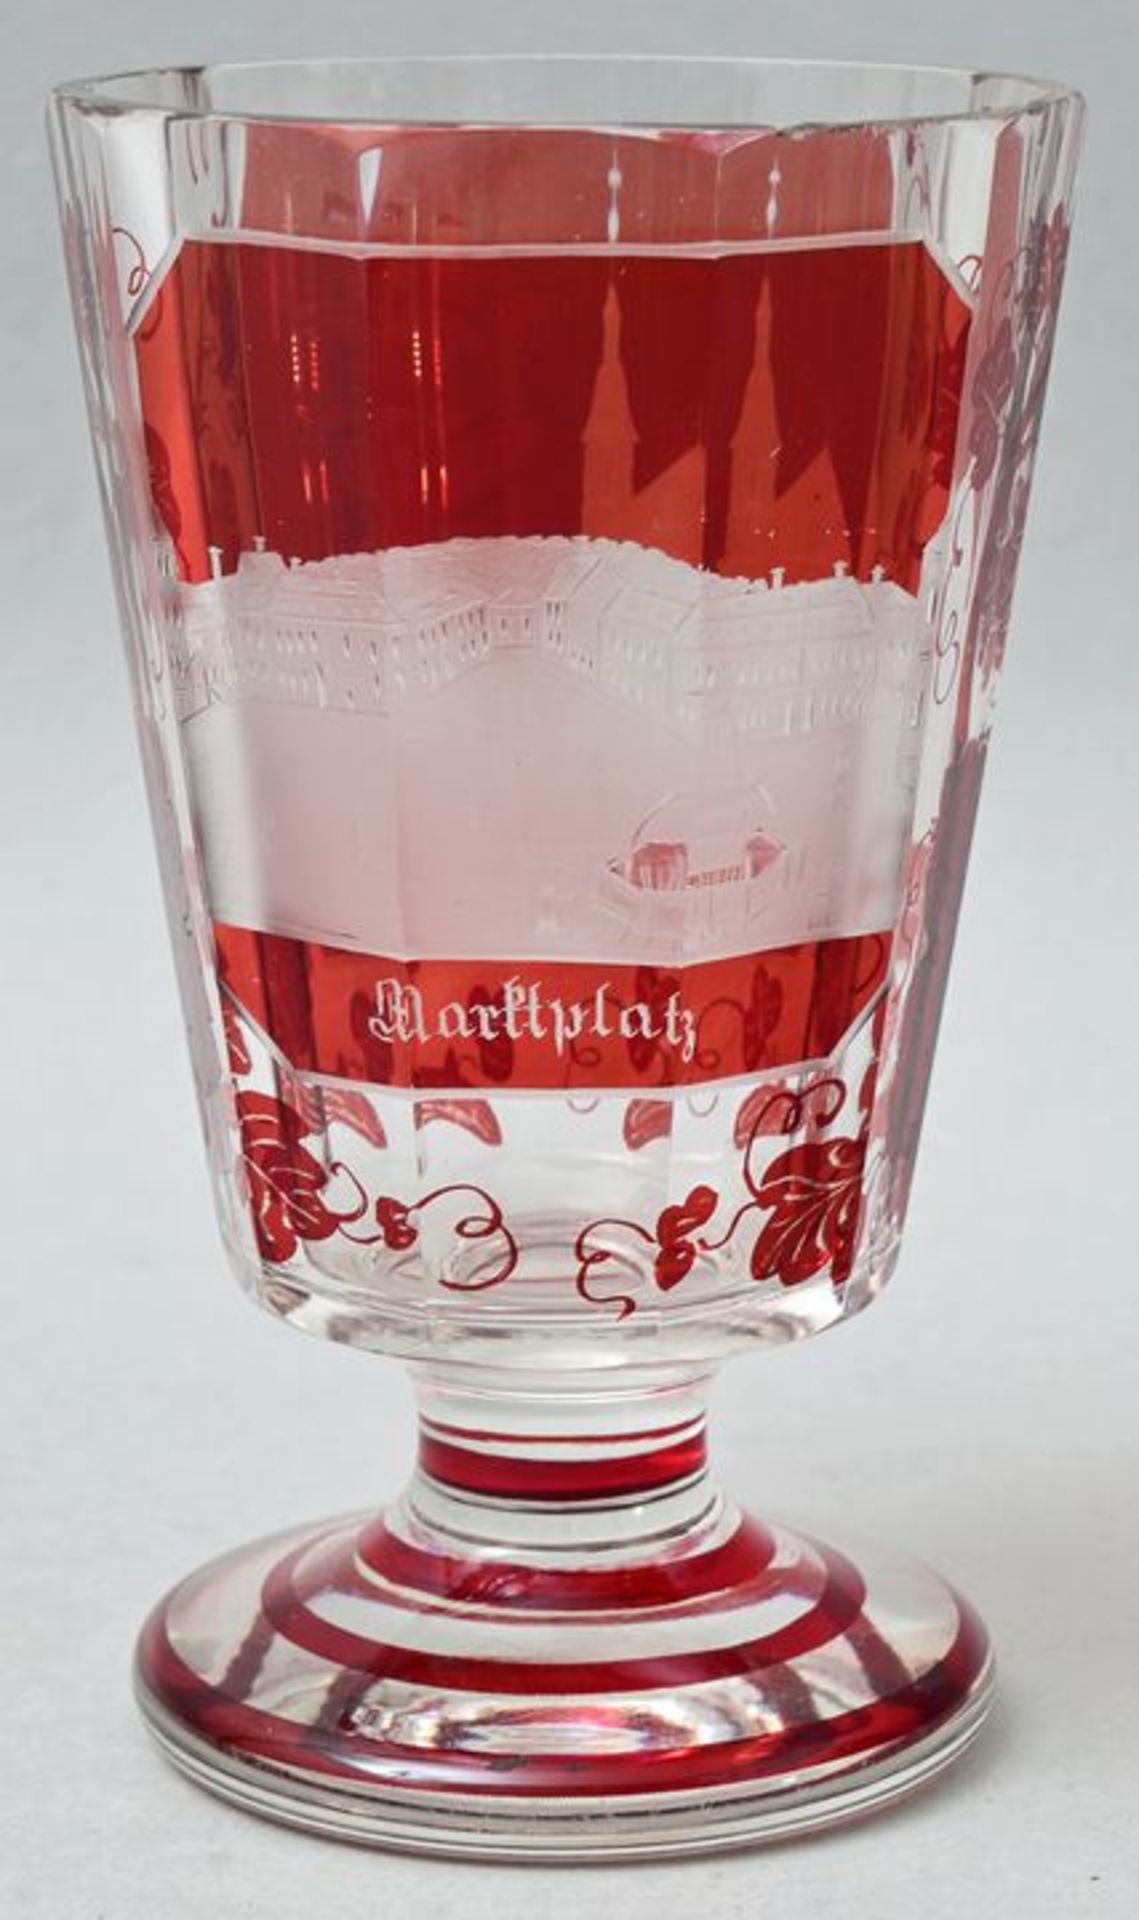 Andenken an Bad Salzungen/ glass goblet - Image 2 of 3